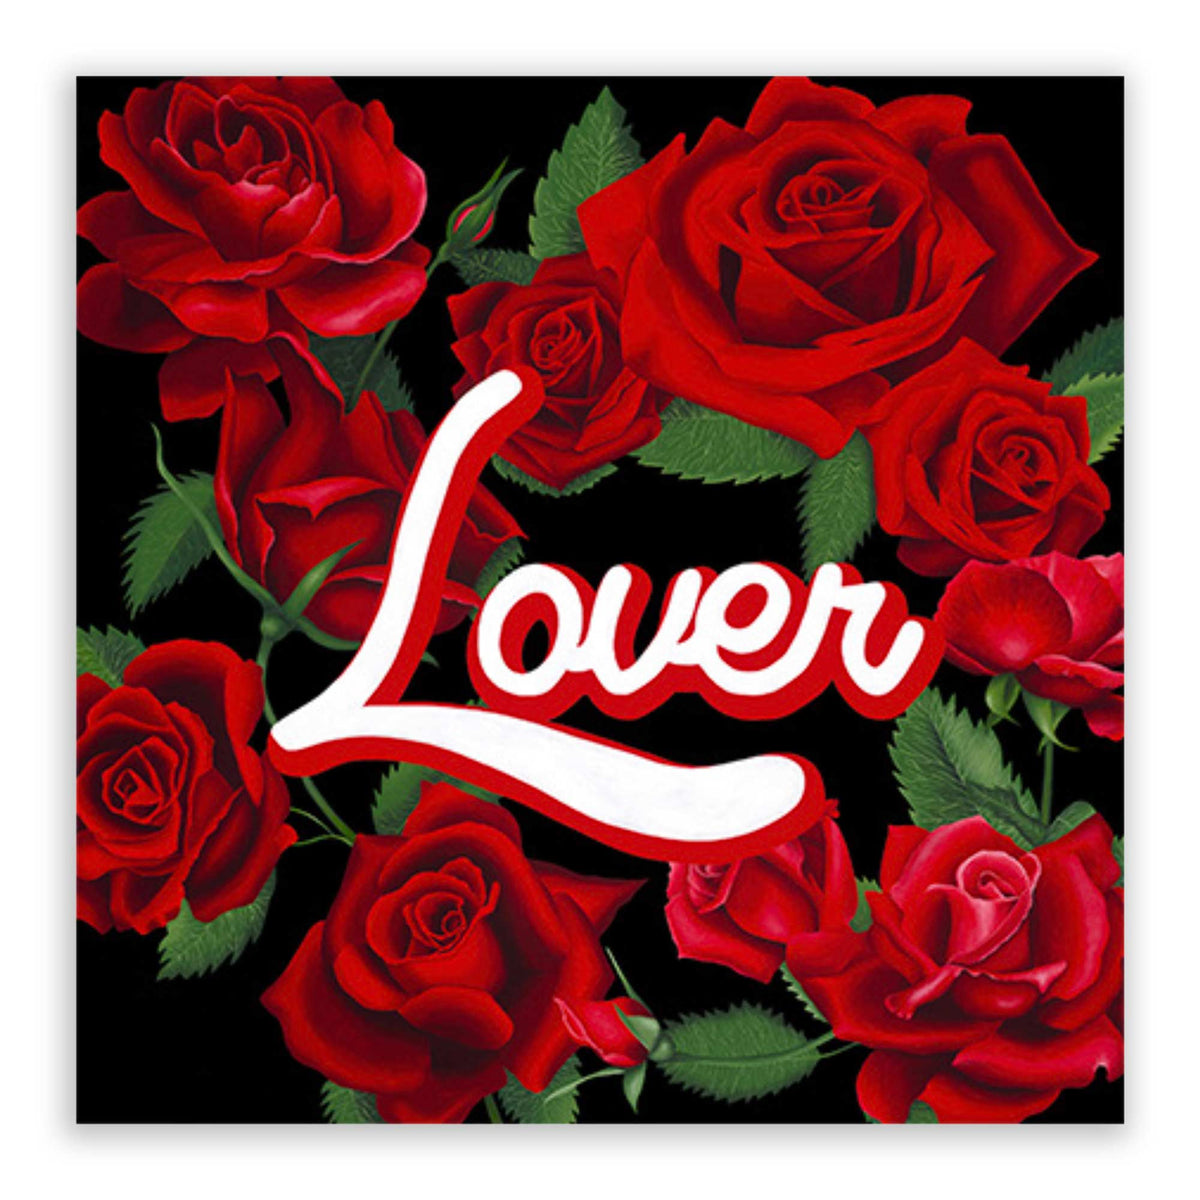 lover - original artwork